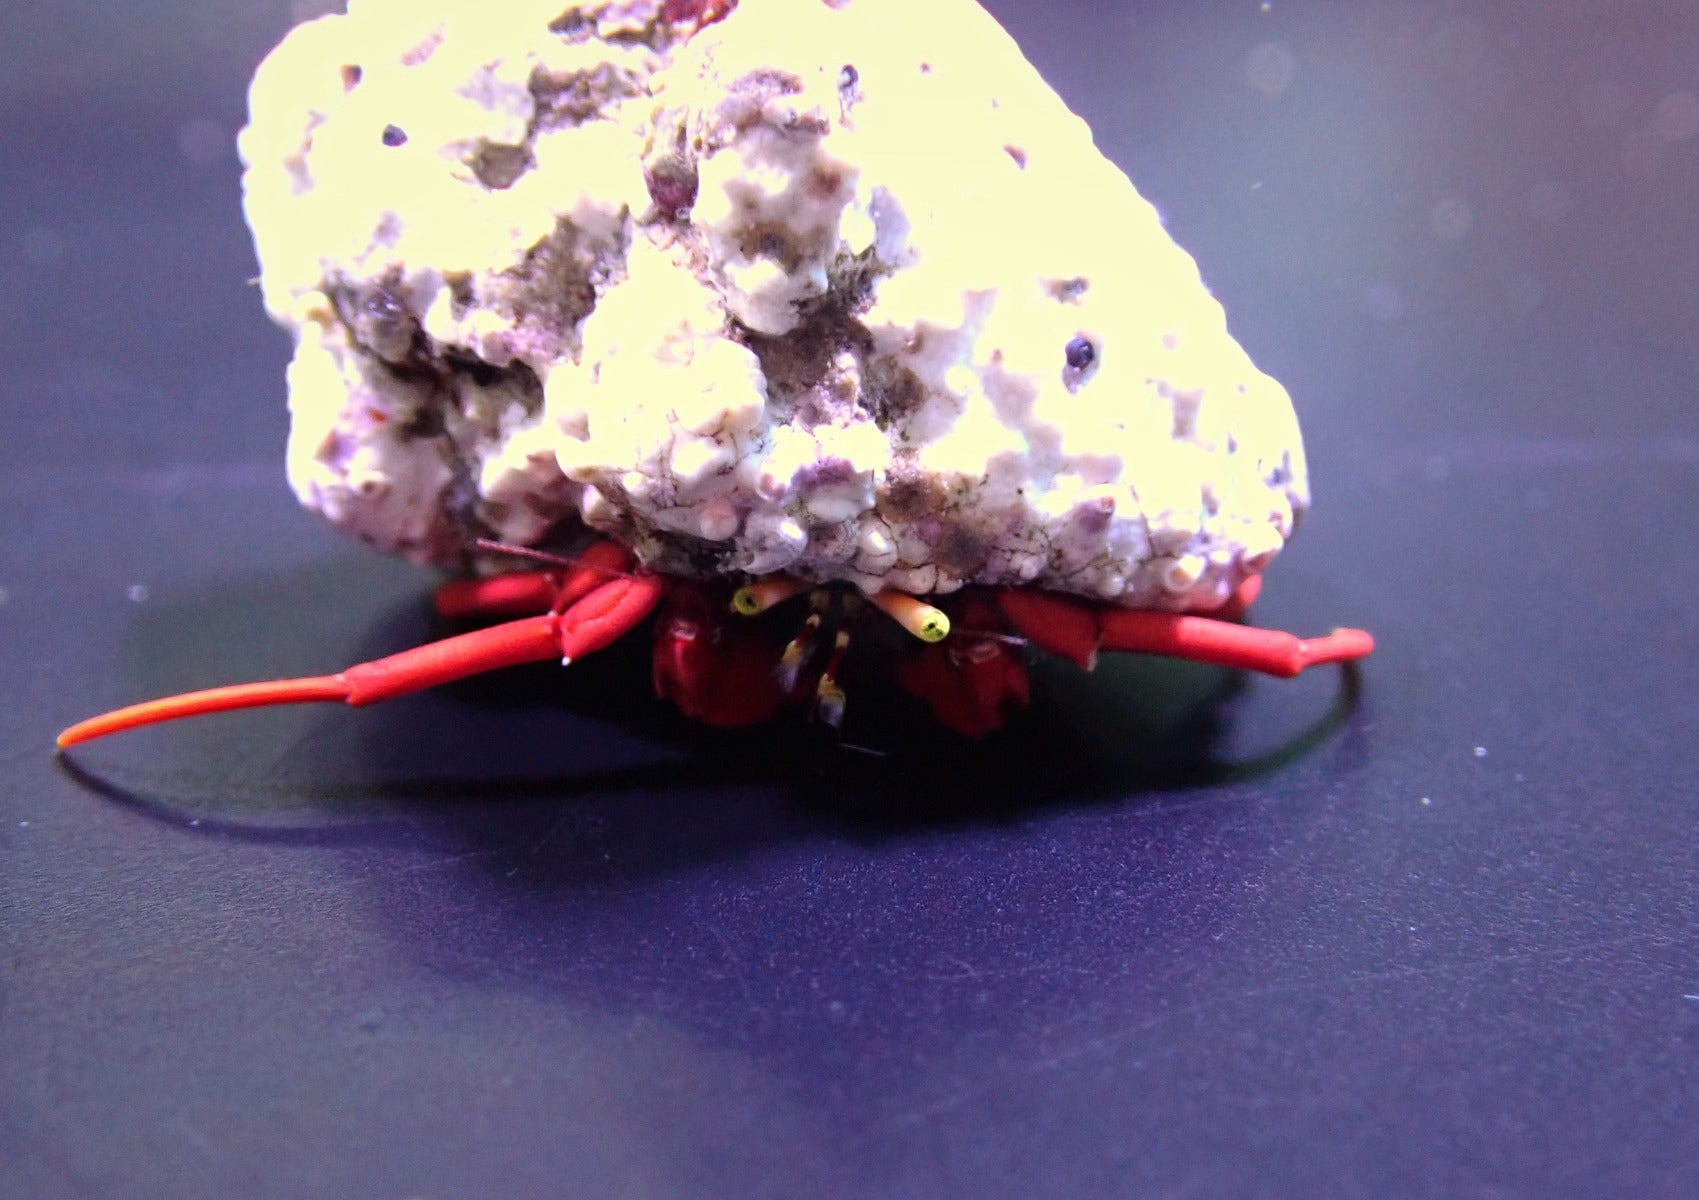 Paguristes cadenati (Caribbean) - Red reef hermit crab